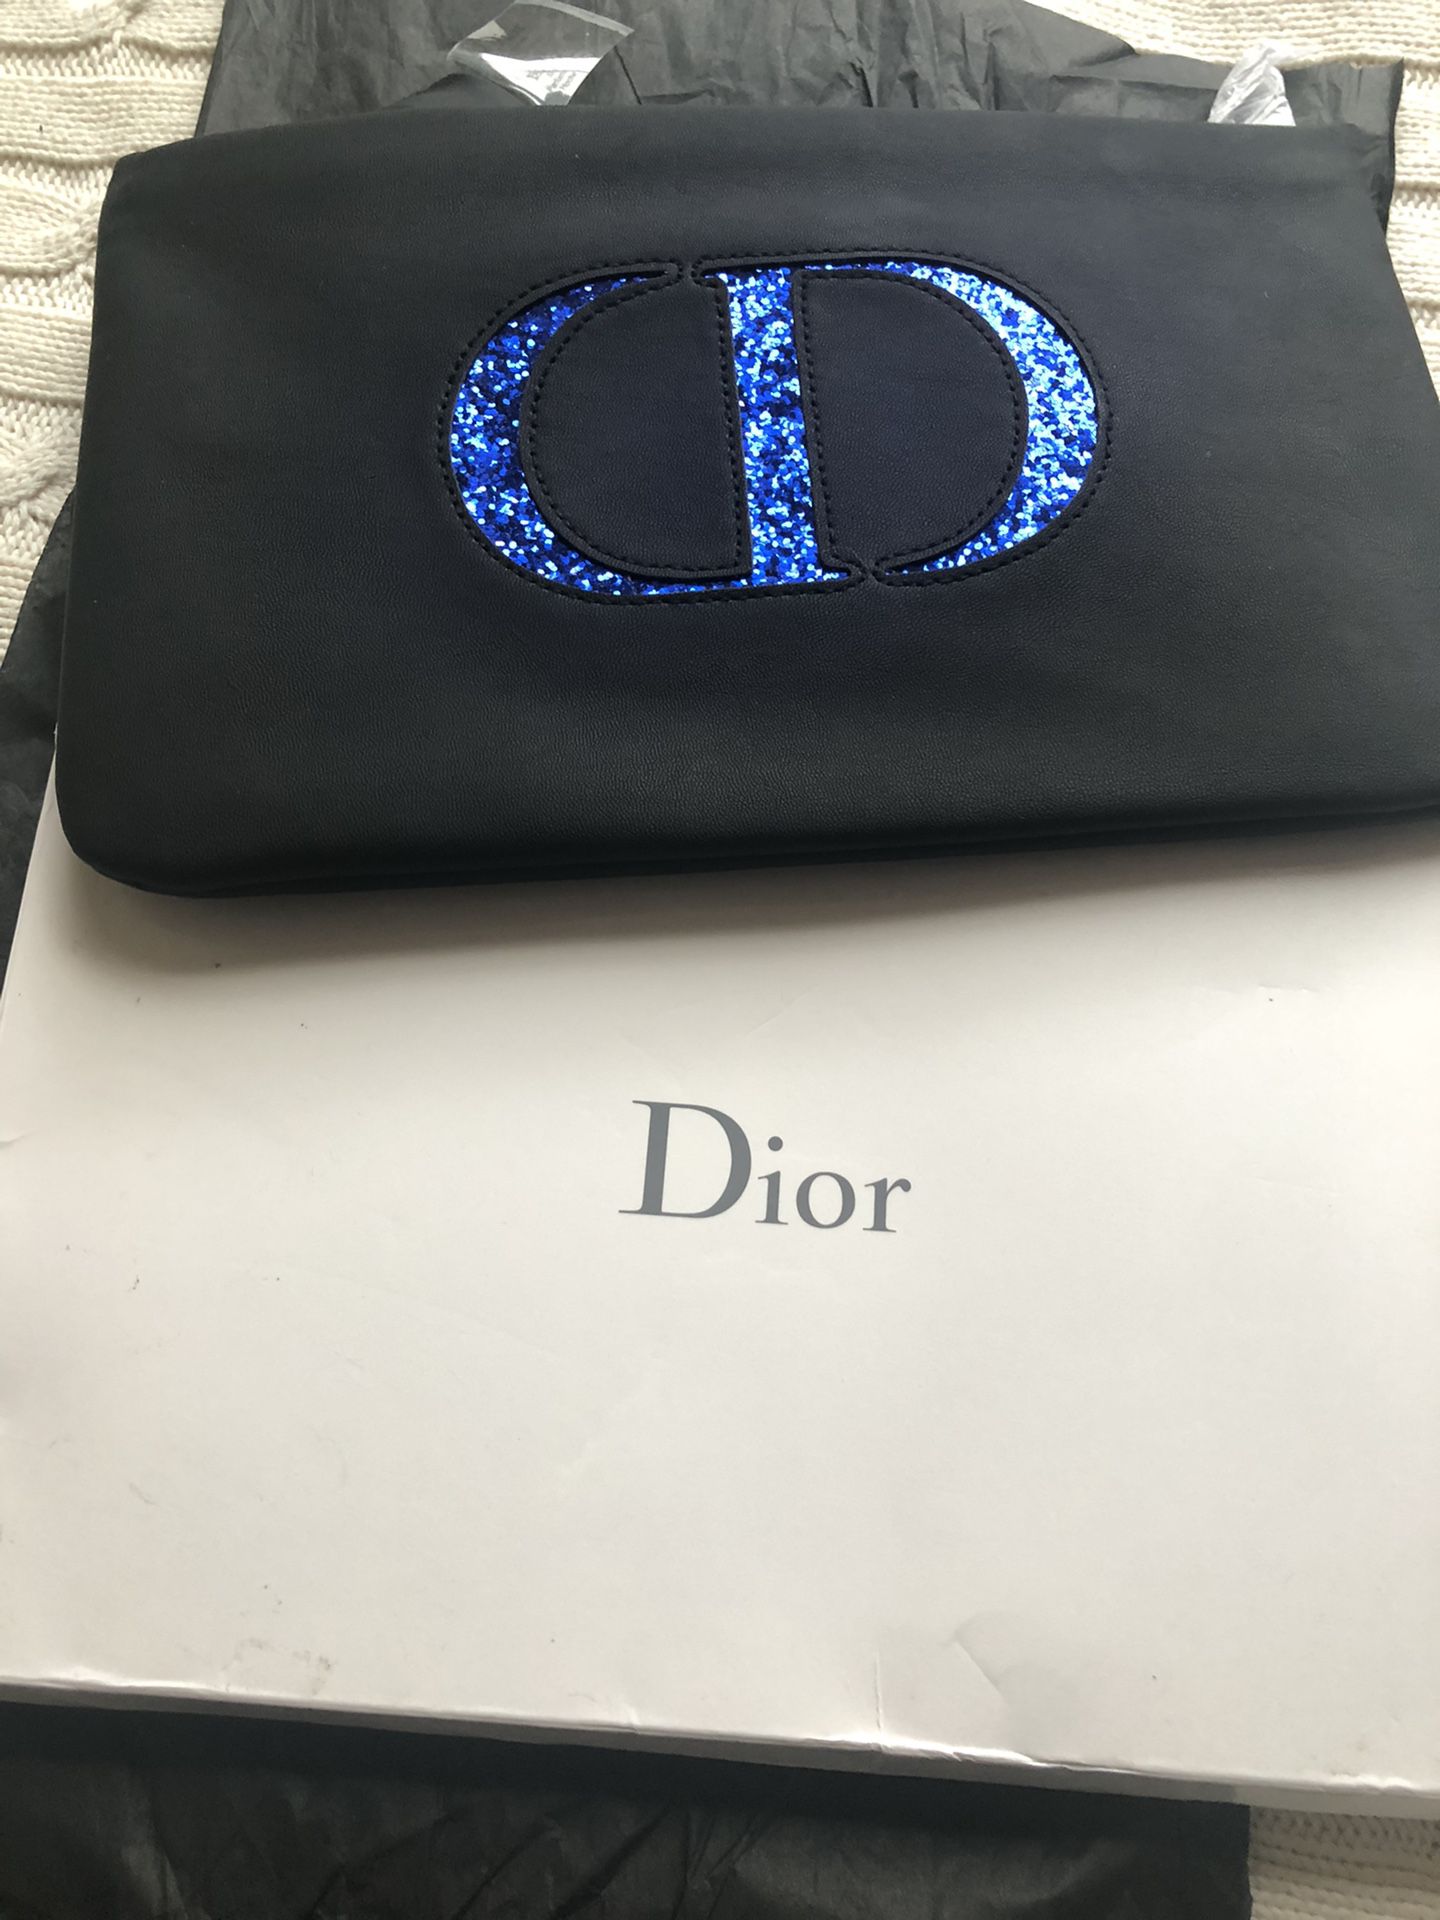 Christian Dior Makeup/Perfume Pouch Bag